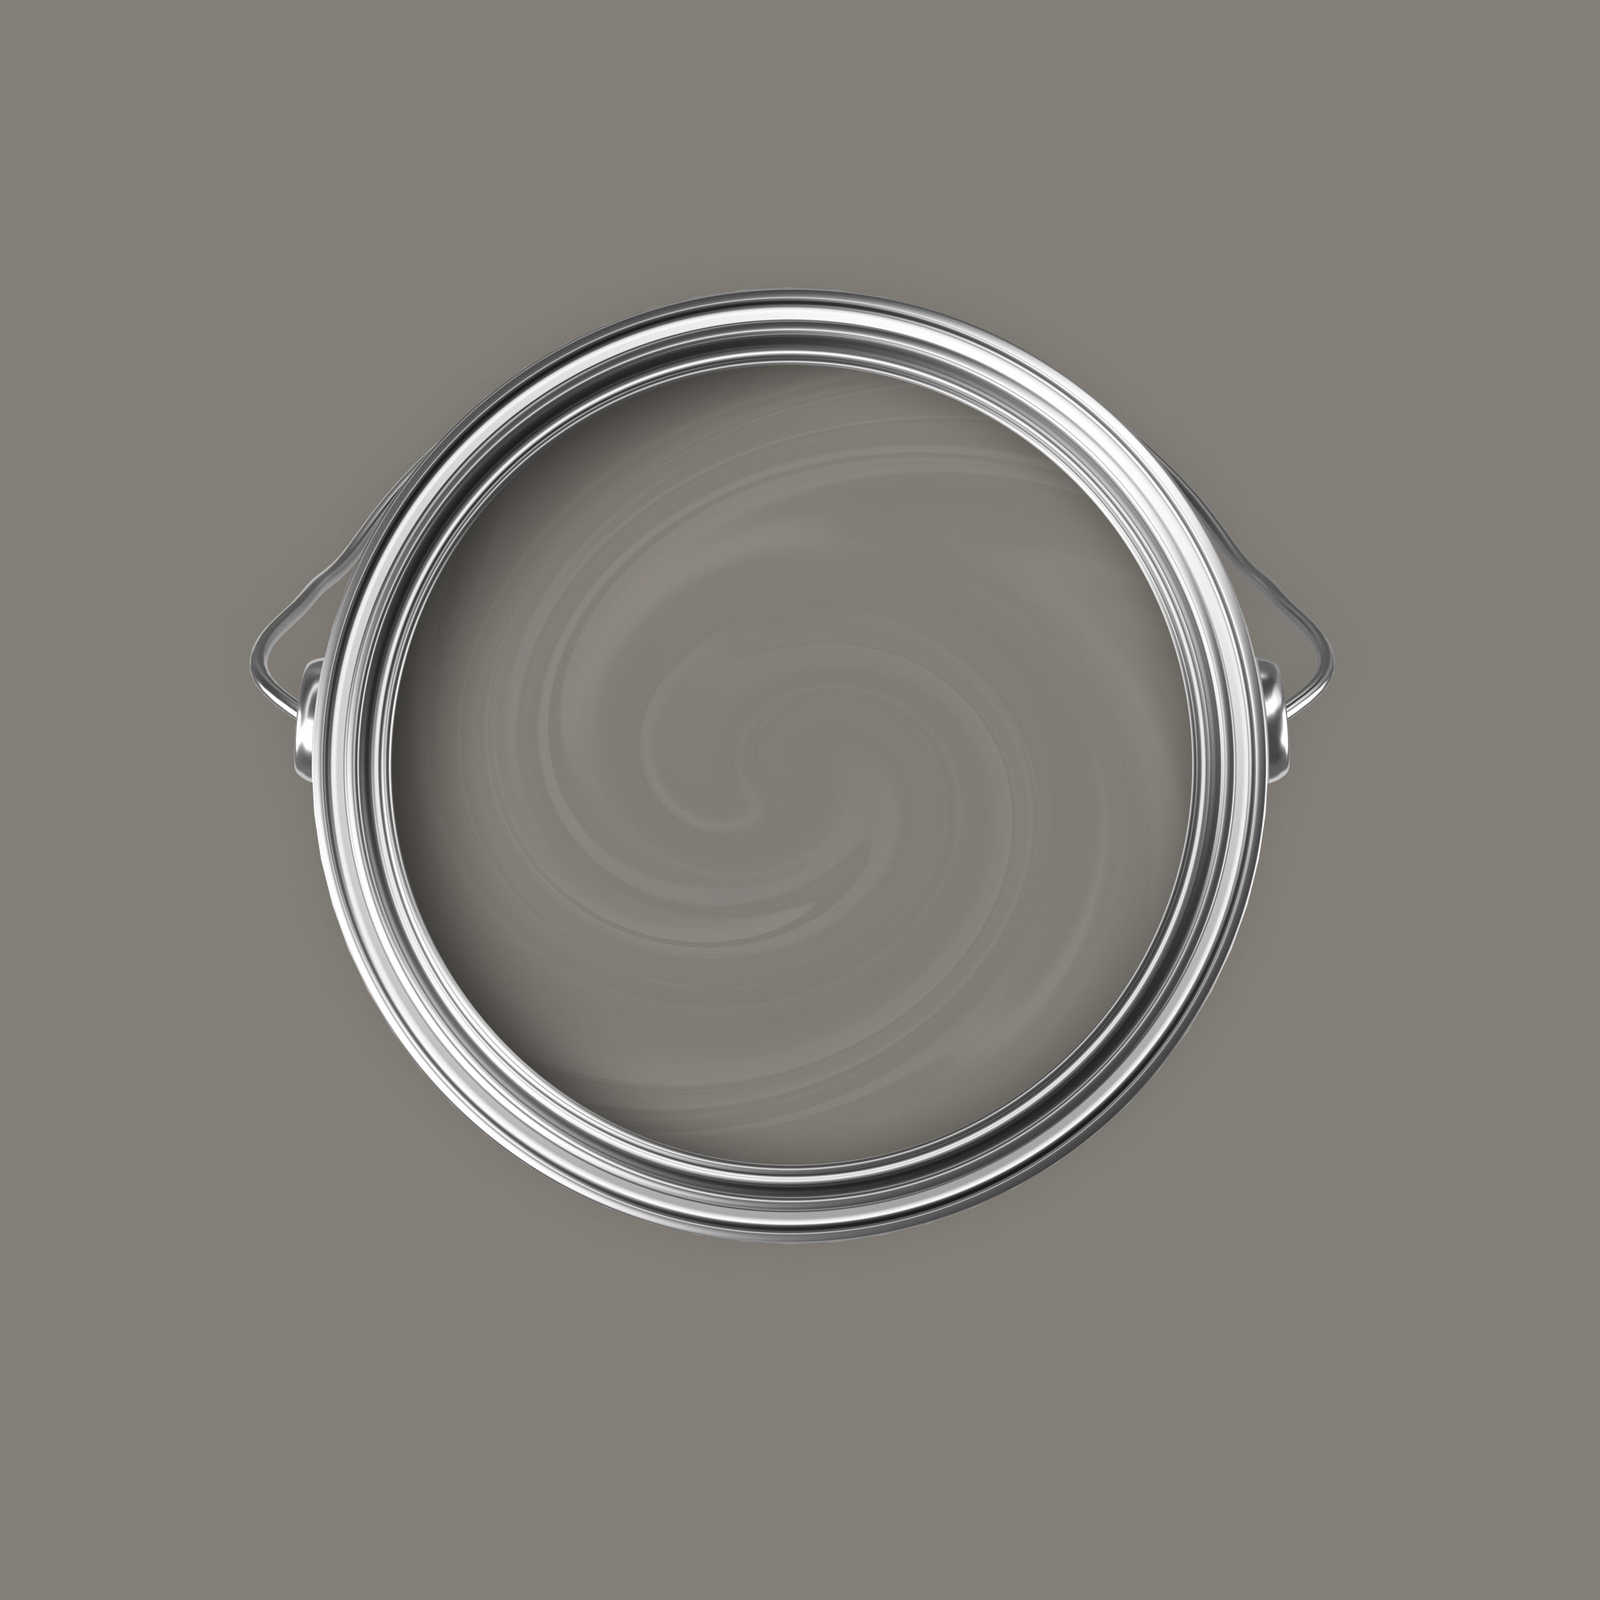             Premium Wall Paint neutral concrete grey »Creamy Grey« NW112 – 5 litre
        